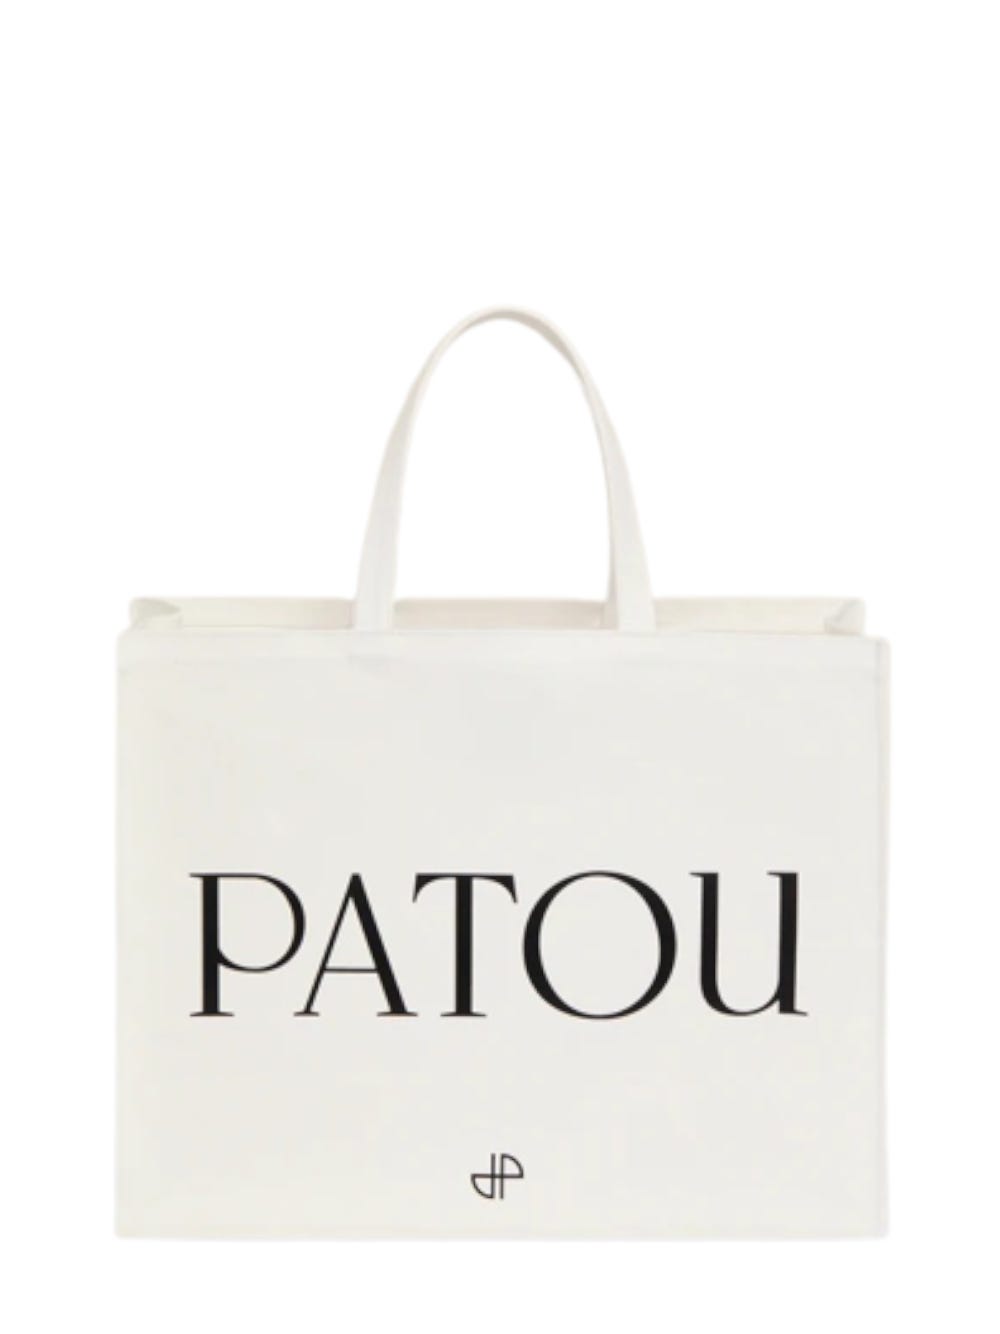 PATOU Bags for Women | ModeSens